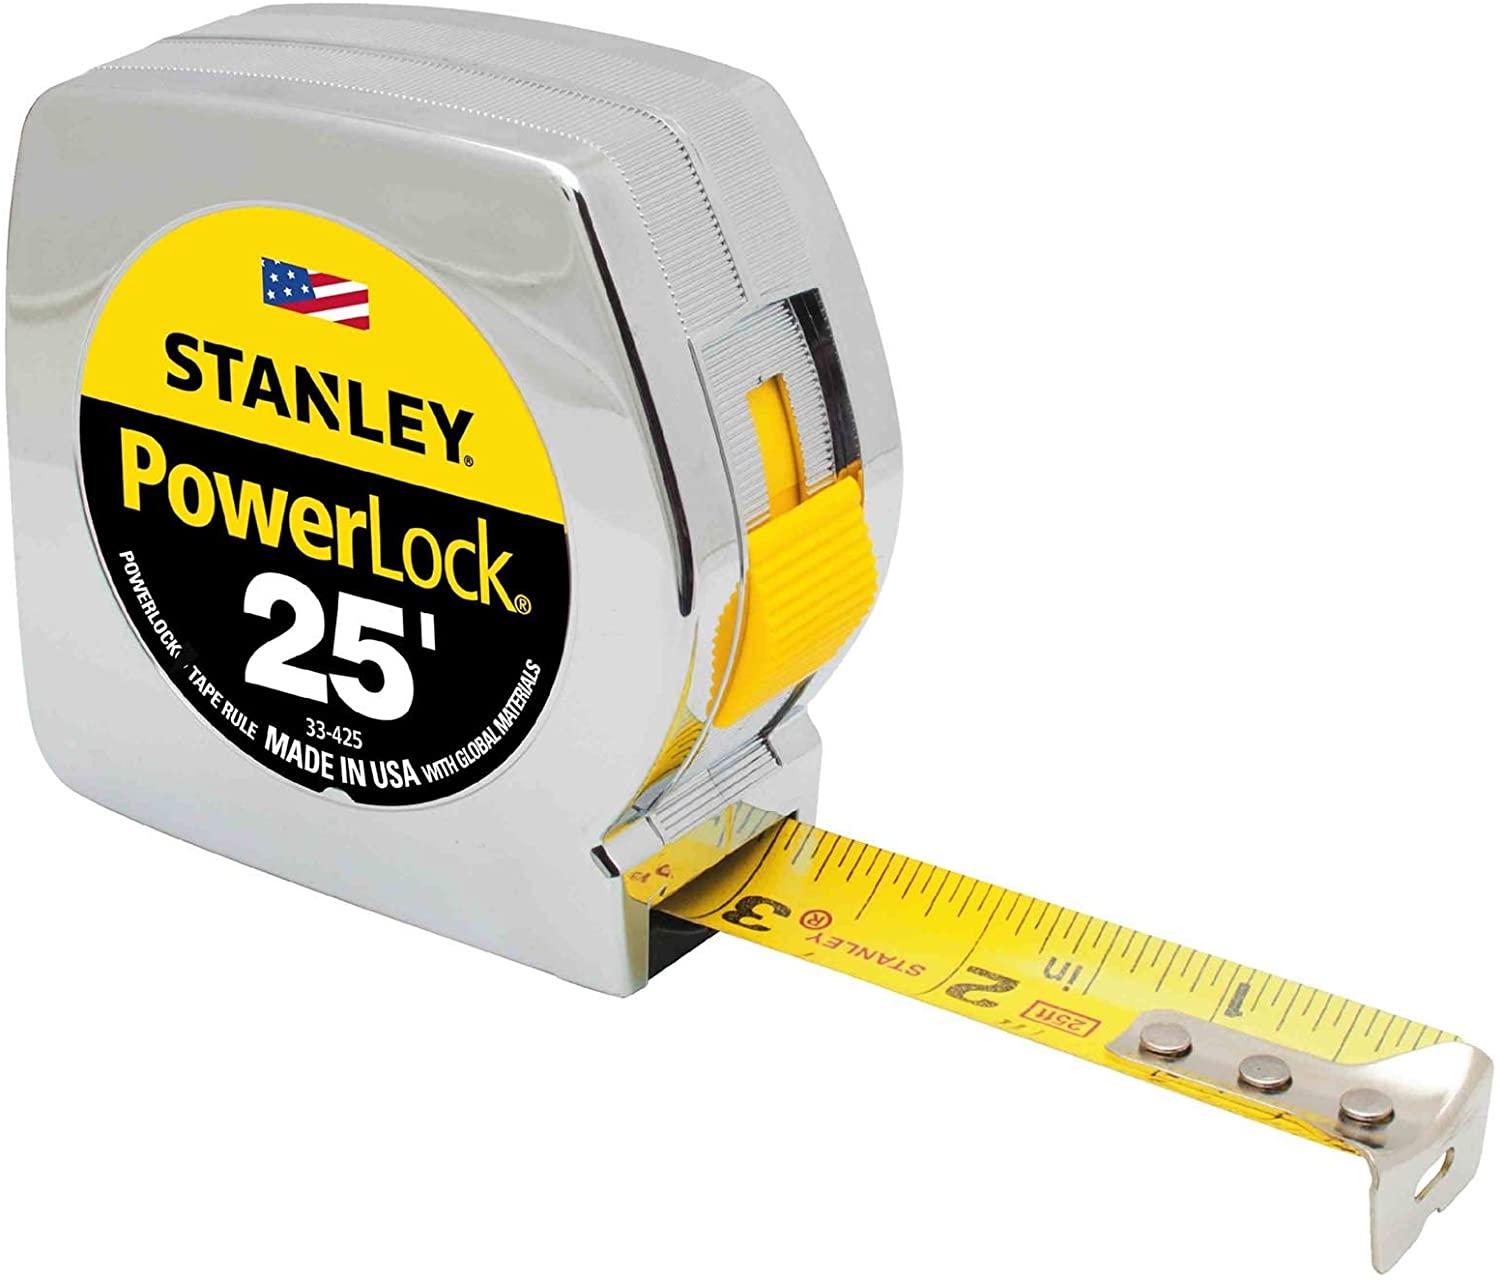 Stanley 25ft PowerLock Tape Measure for $4.99